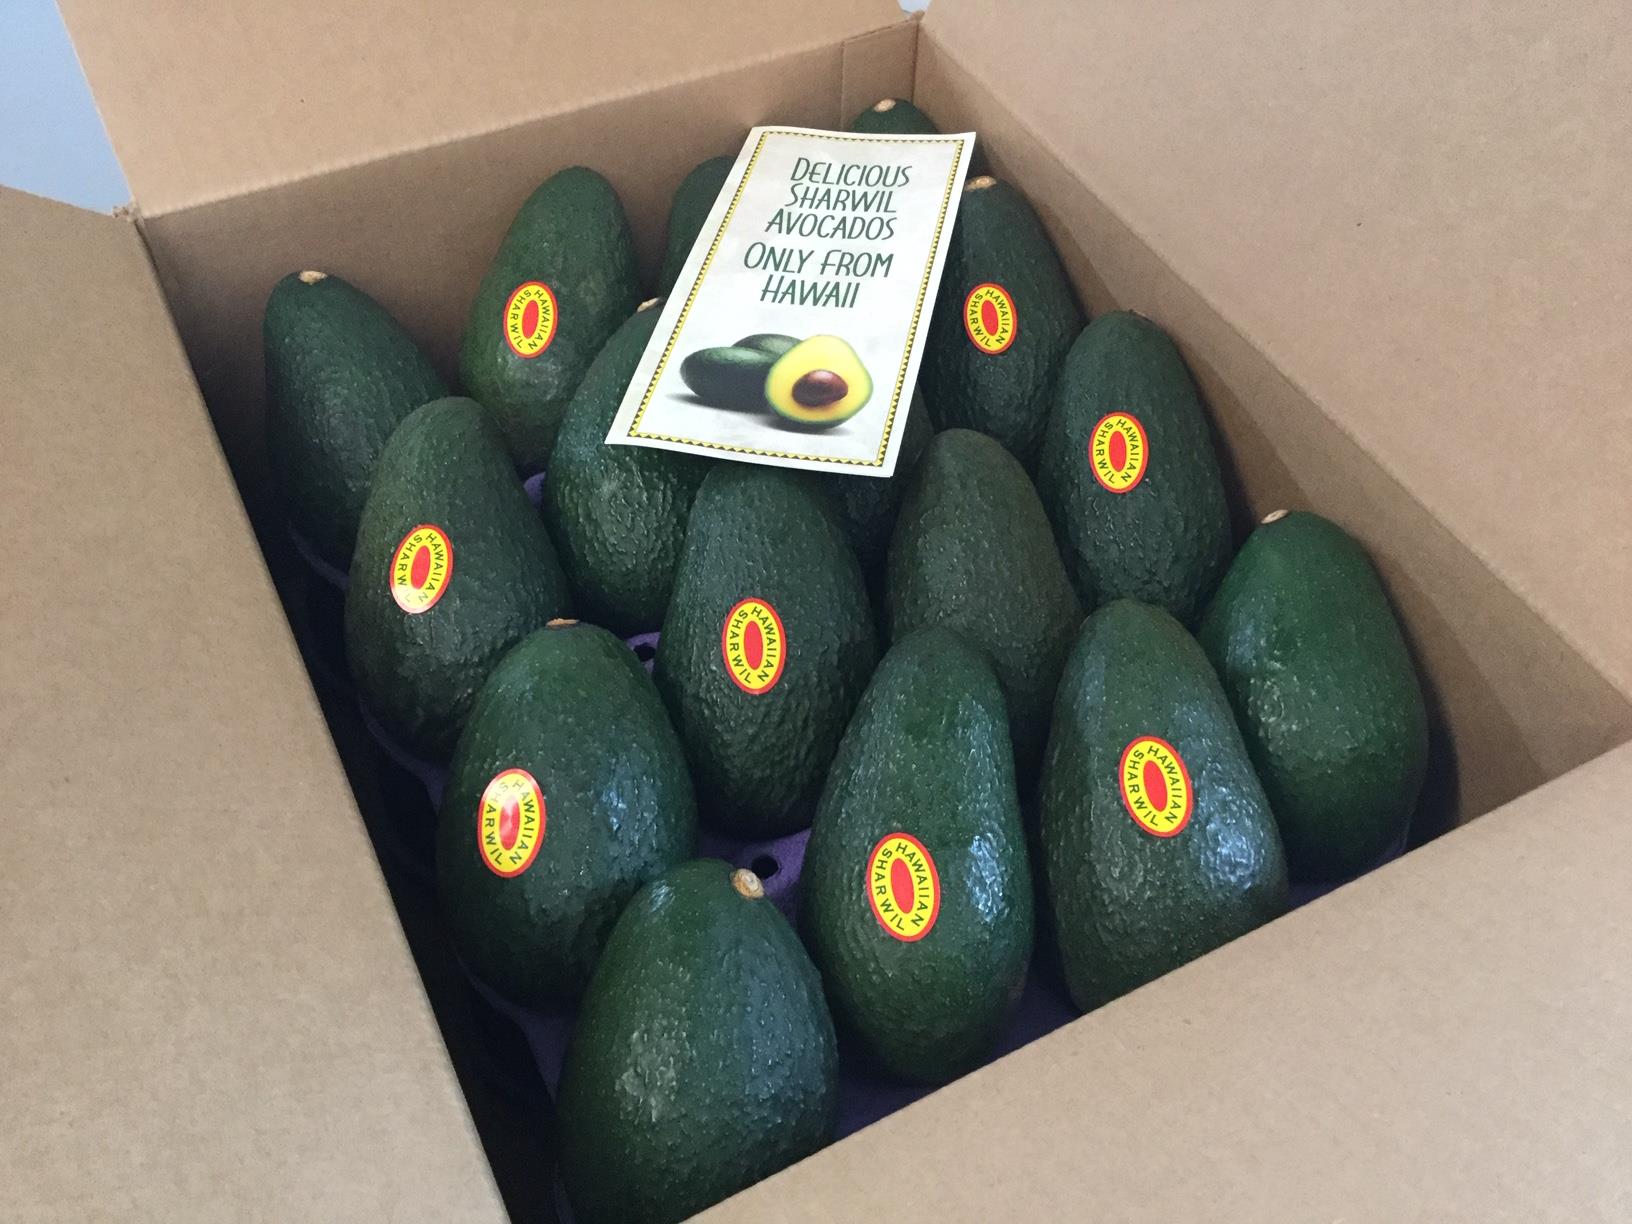 Sharwil avocado packed for shipment